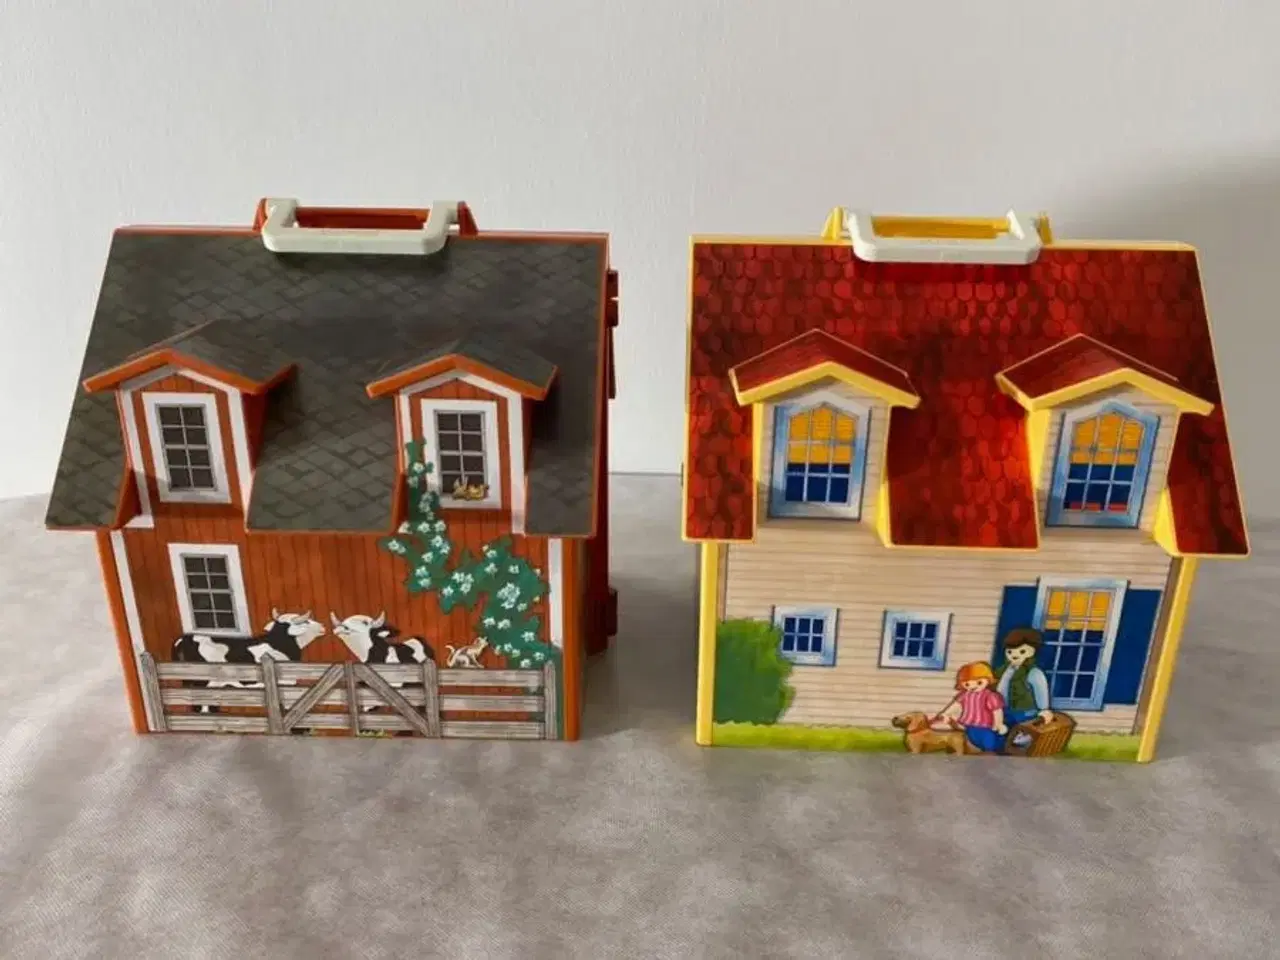 Billede 1 - Playmobil huse